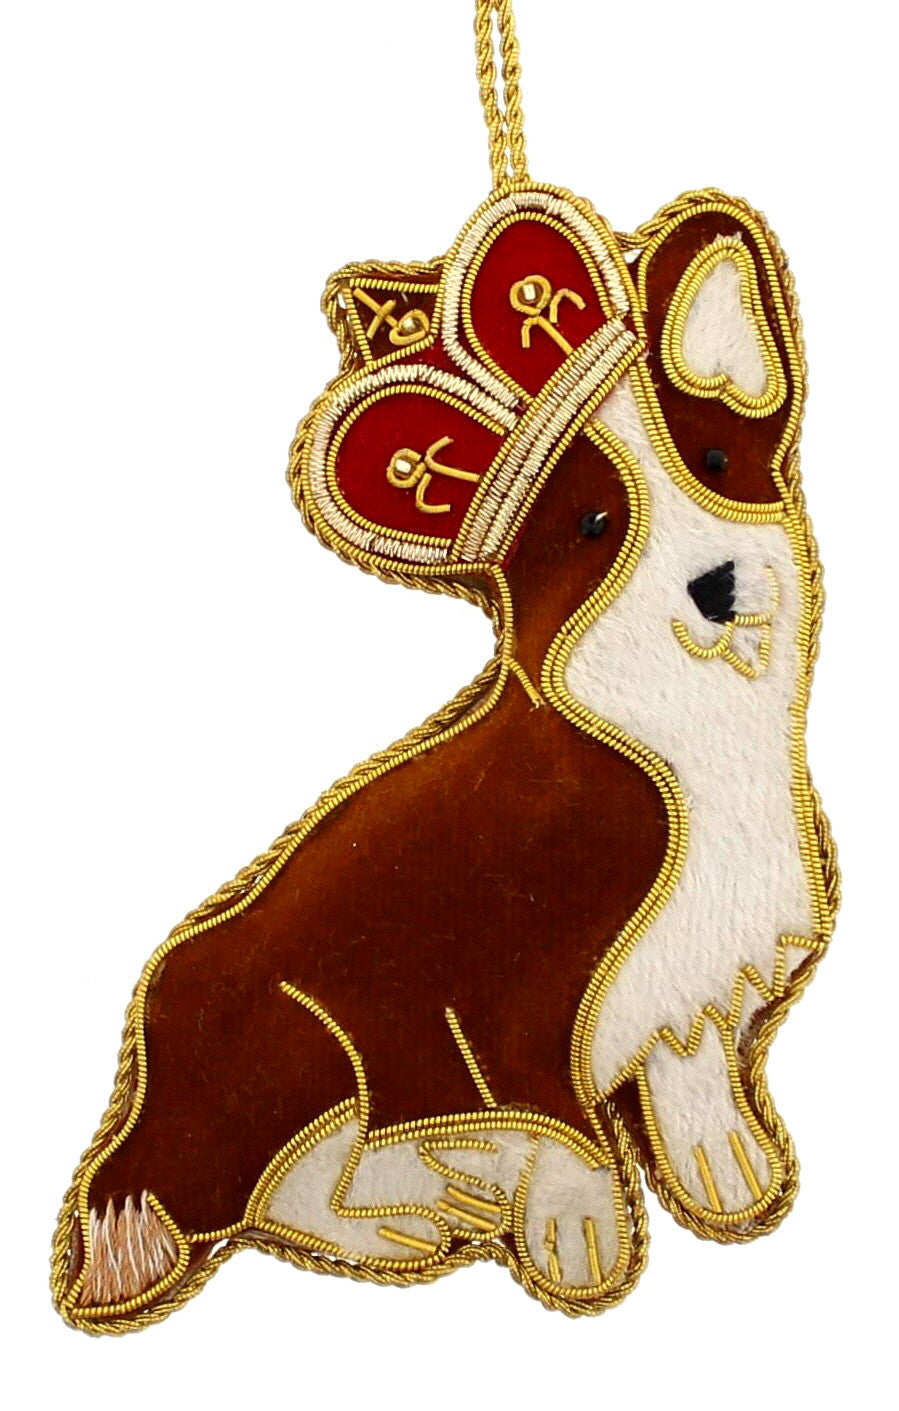 A handmade fabric sewn decoration featuring a corgi dog wearing a crown.